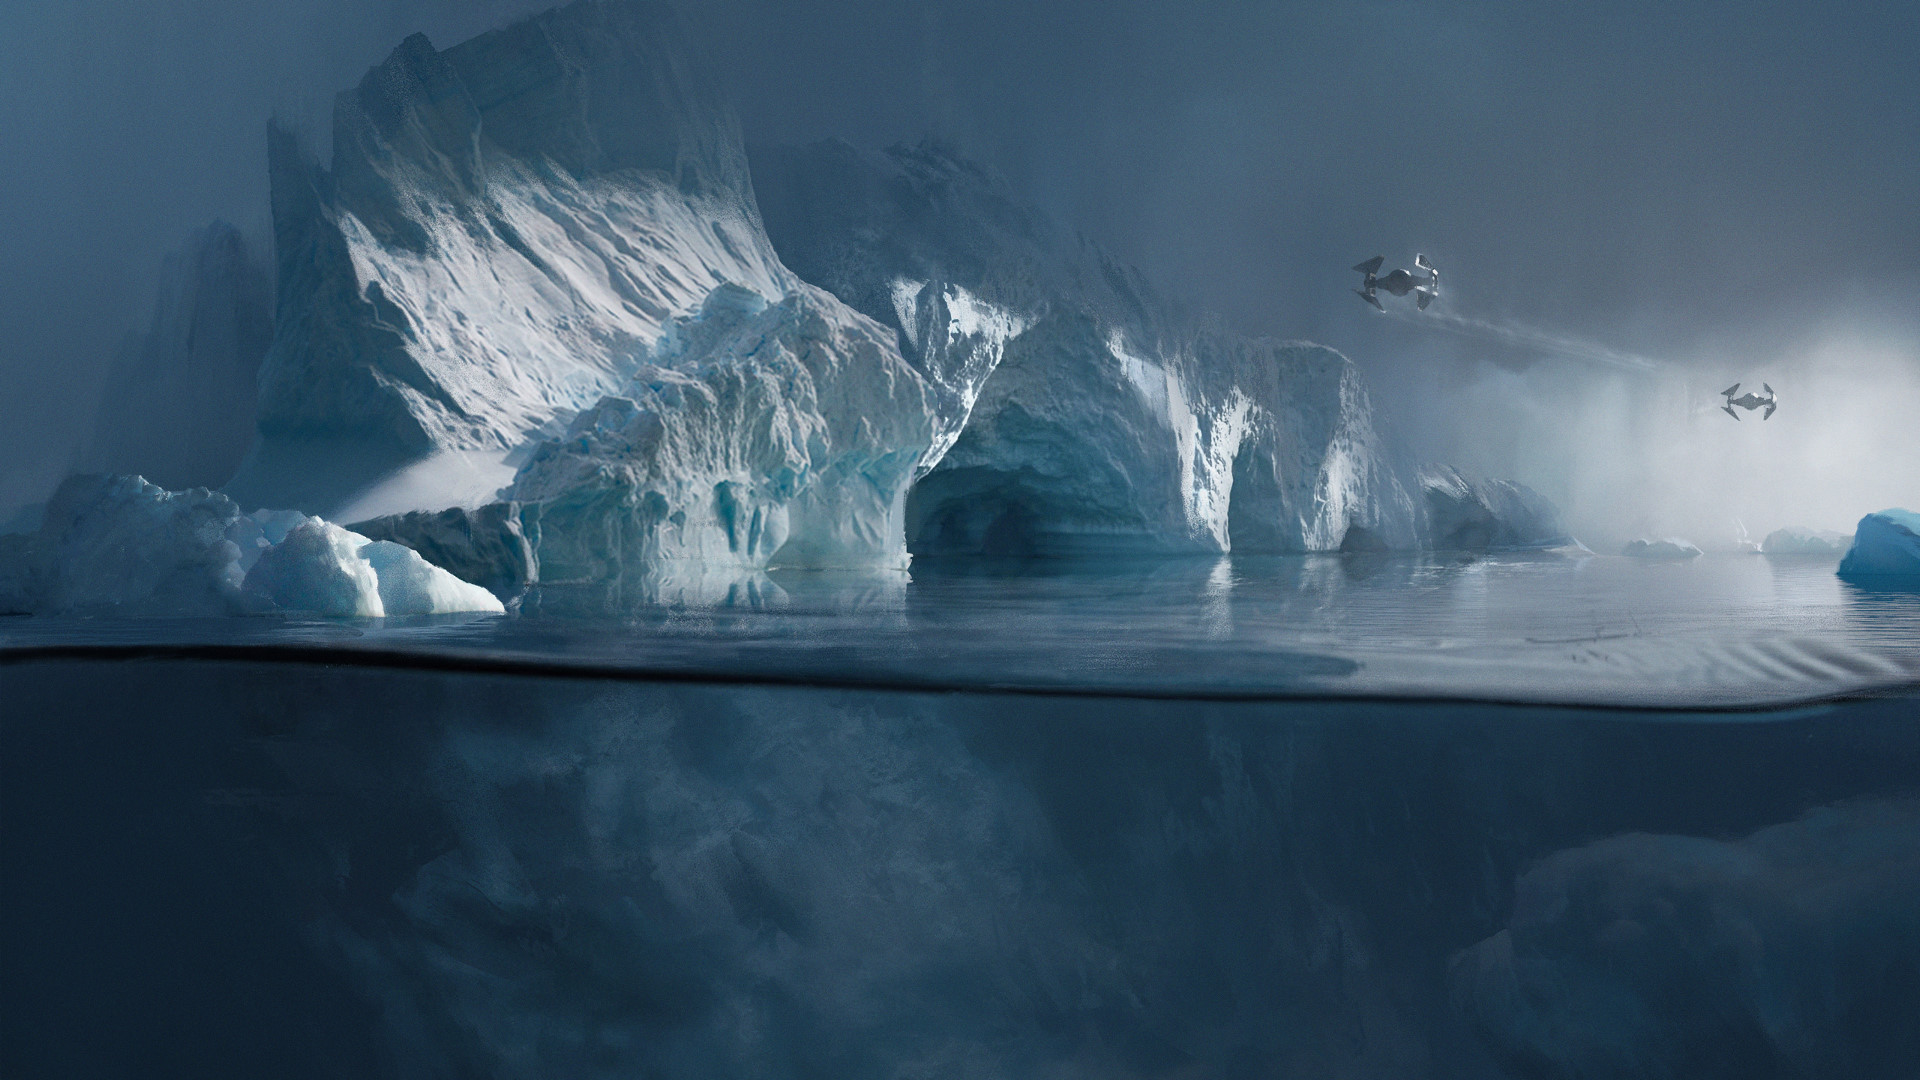 Rostyslav Zagornov Star Wars Artwork Ice Star Wars Ships Science Fiction Water Underwater 1920x1080